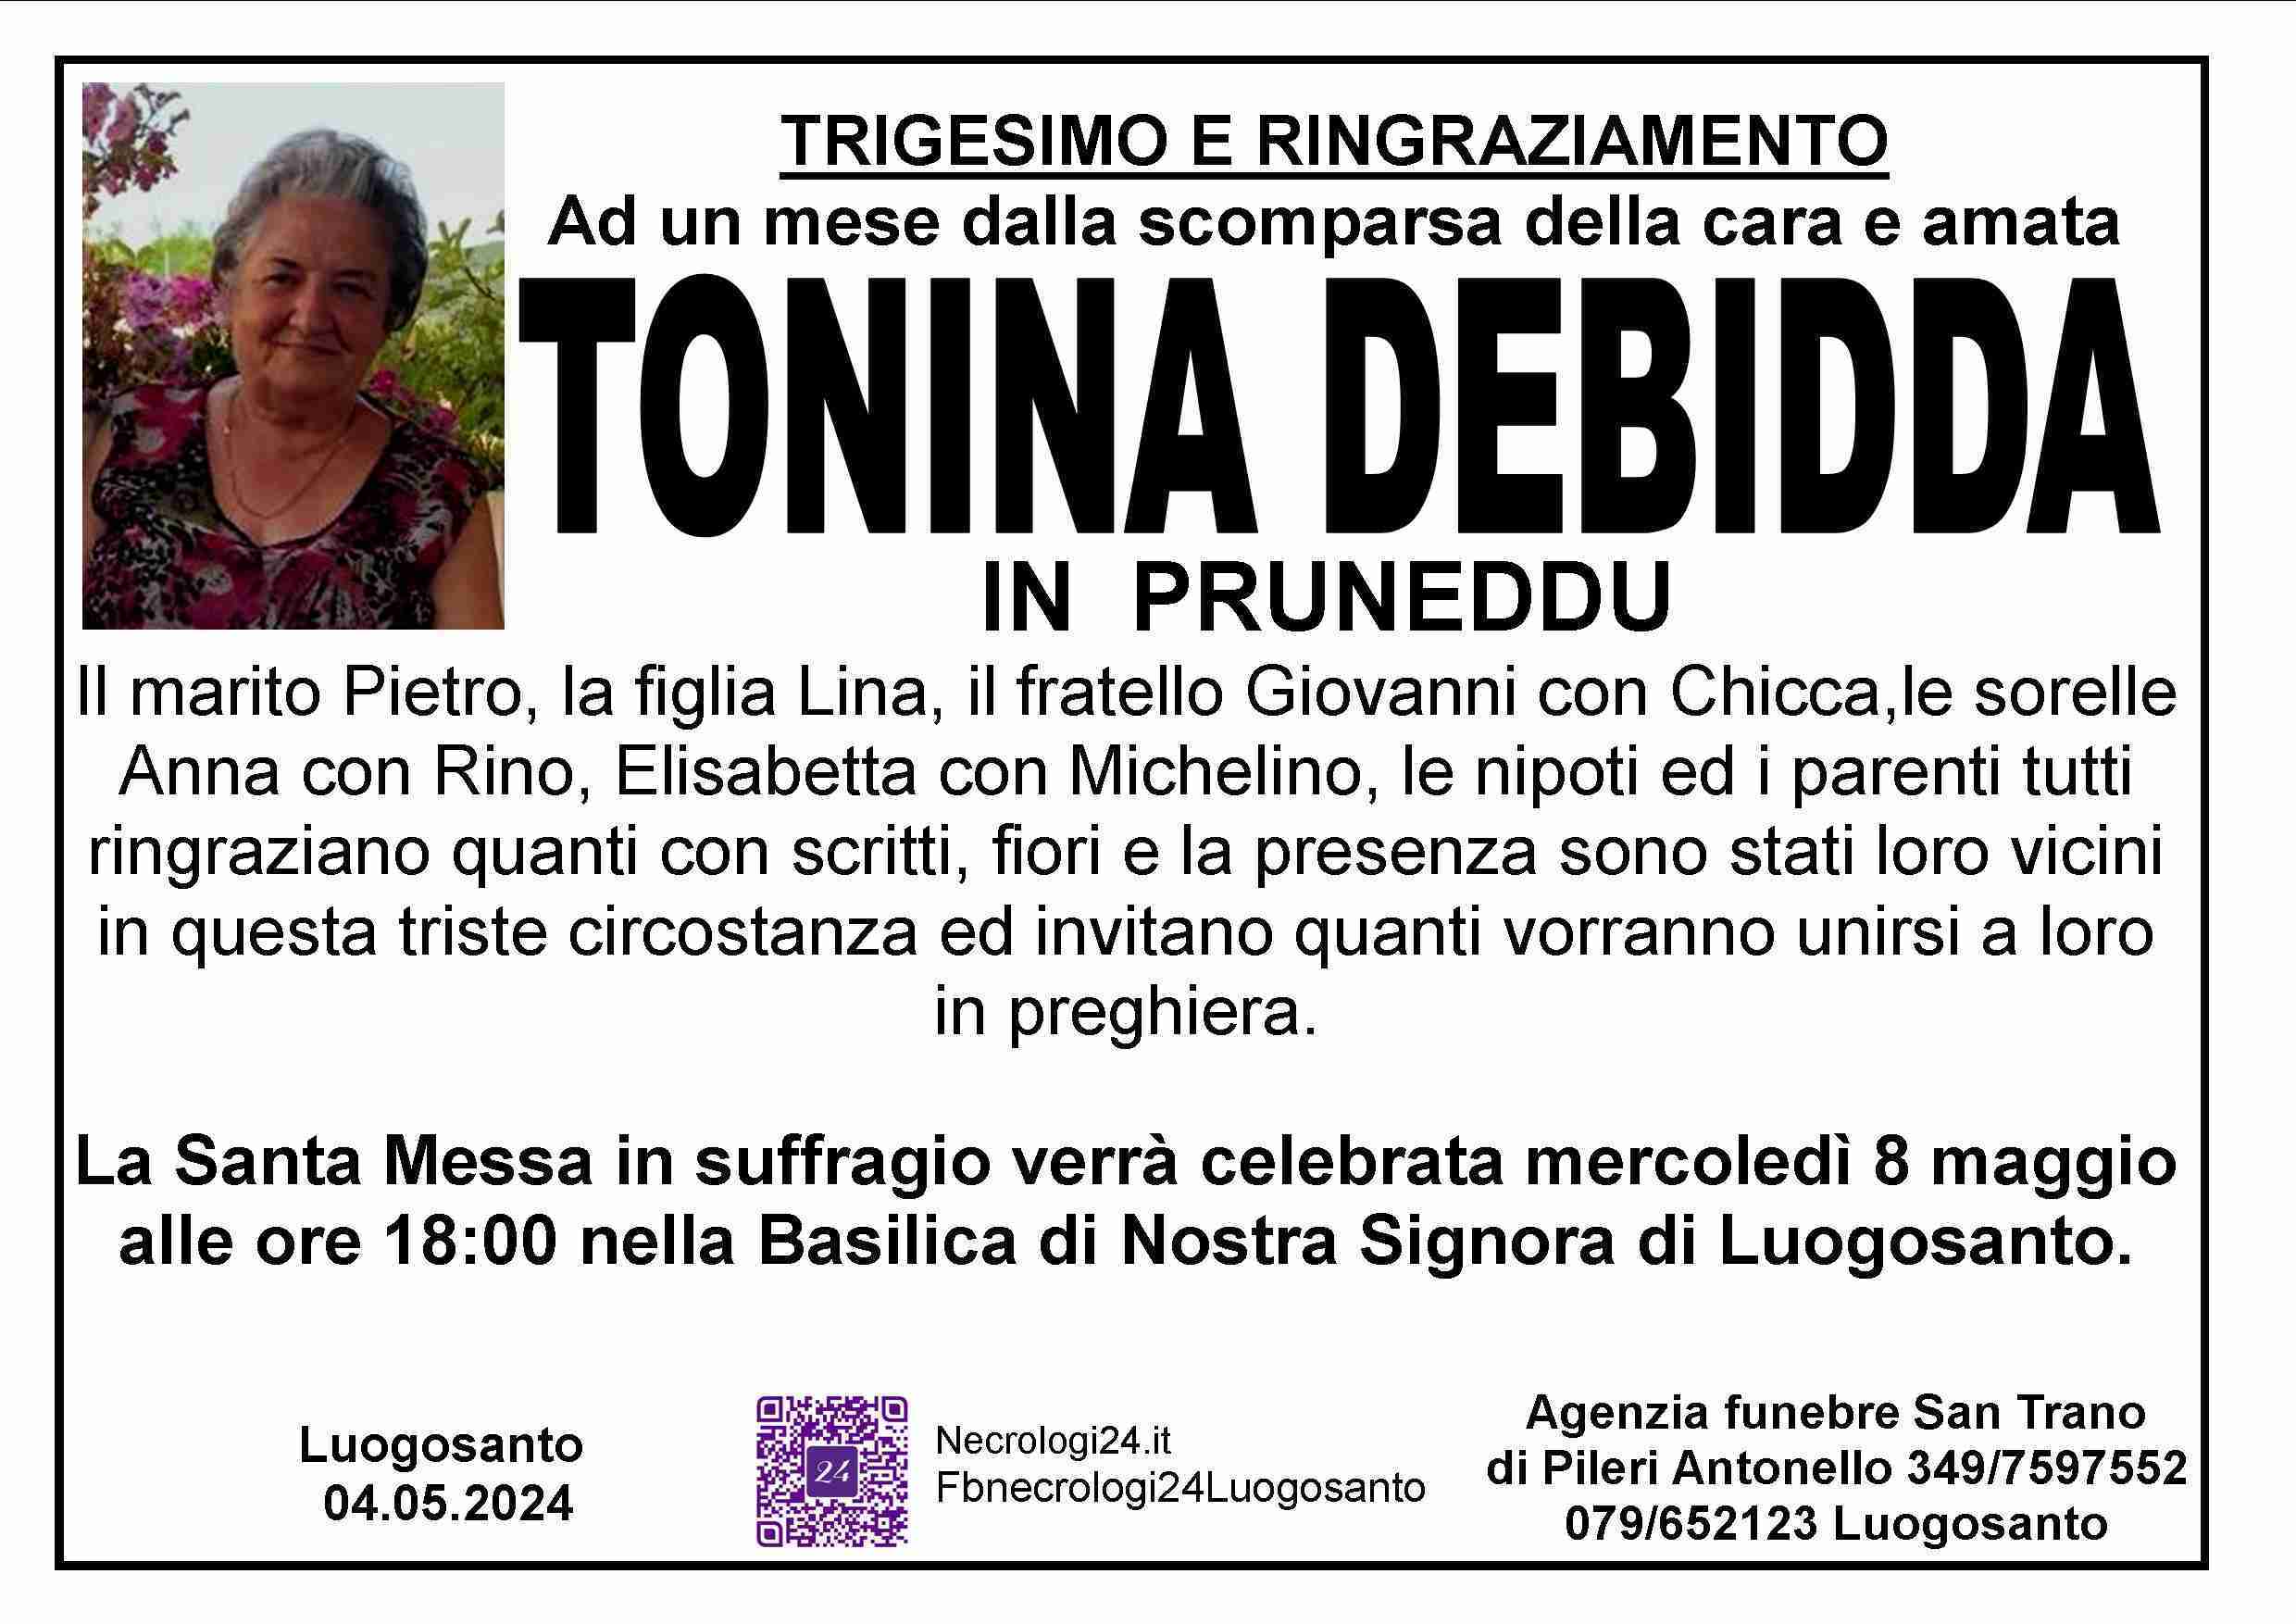 Tonina Debidda